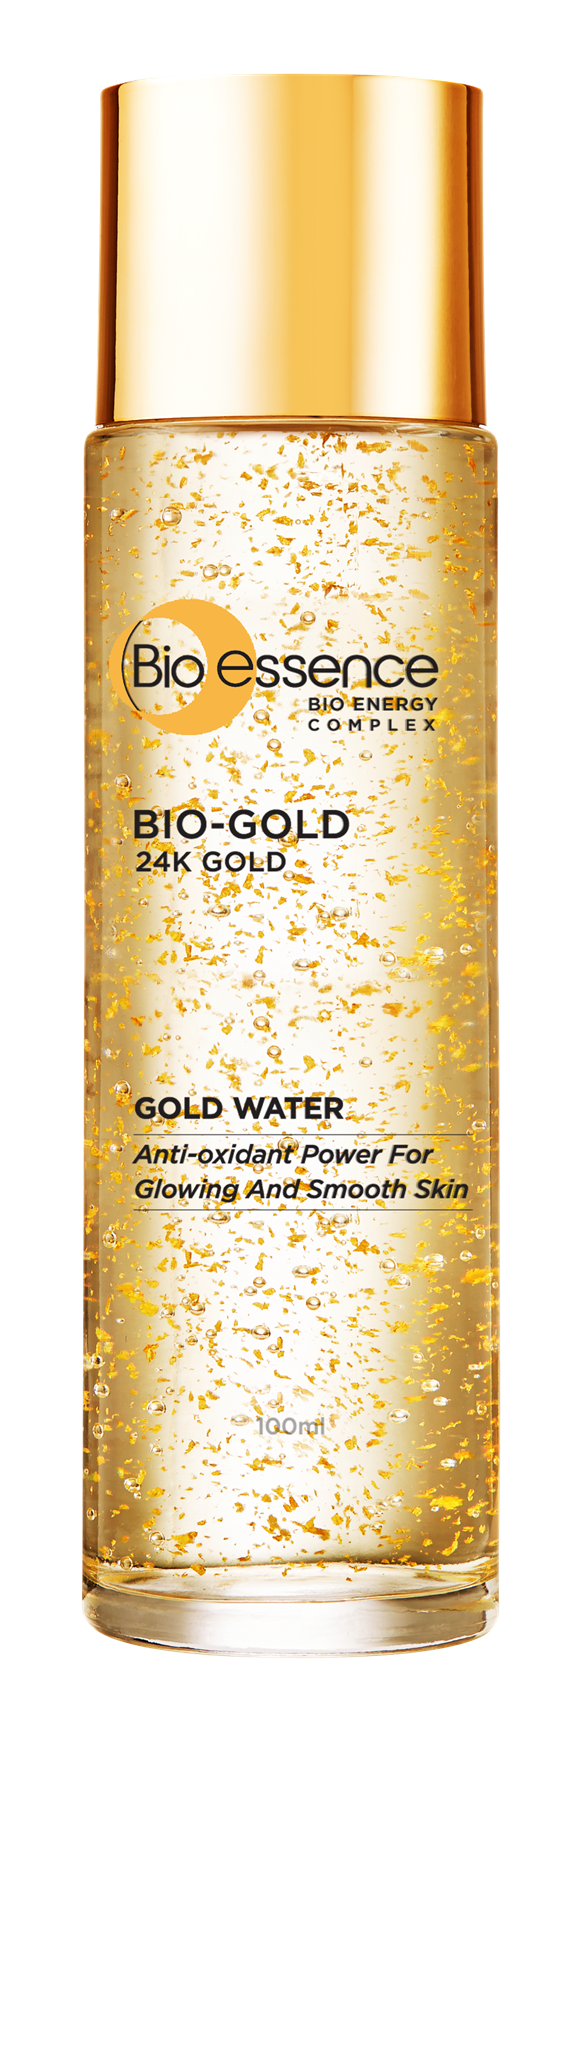 Bio-Gold Gold Water - Bio-essence Singapore